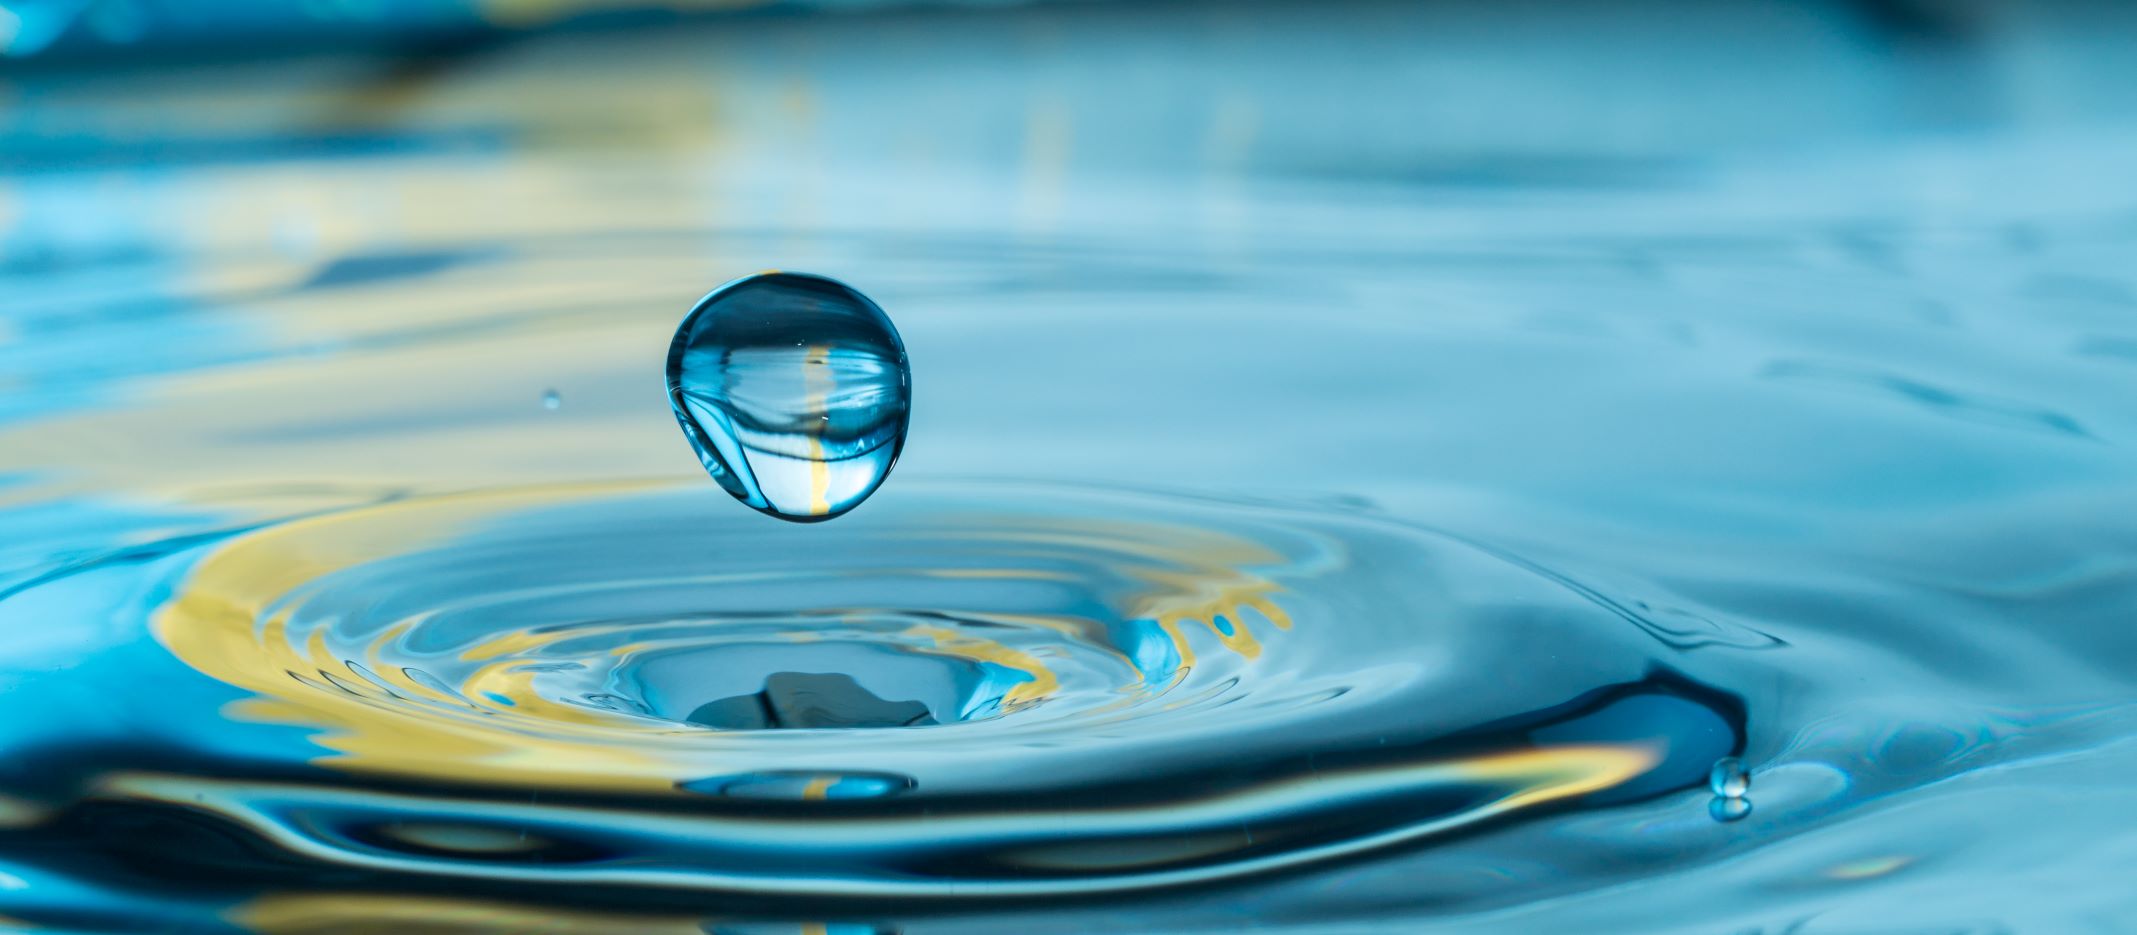 water droplet splashing, rippling outward, mindfulness 